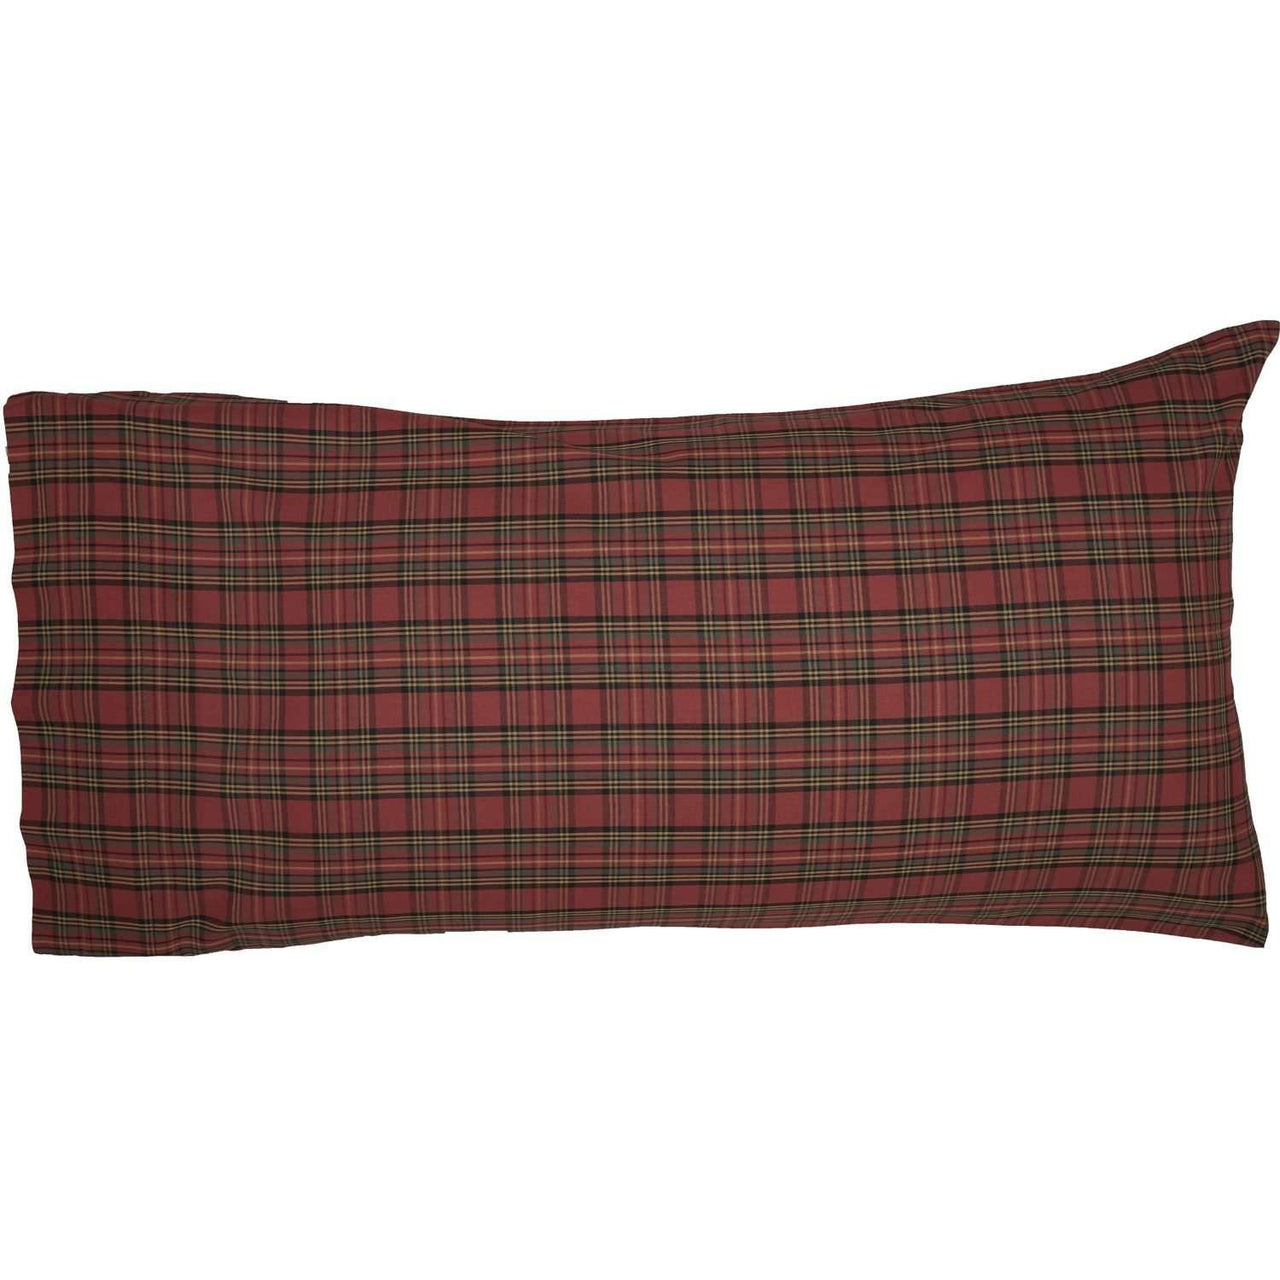 Tartan Red Plaid King Pillow Case Set of 2 21x40 VHC Brands - The Fox Decor